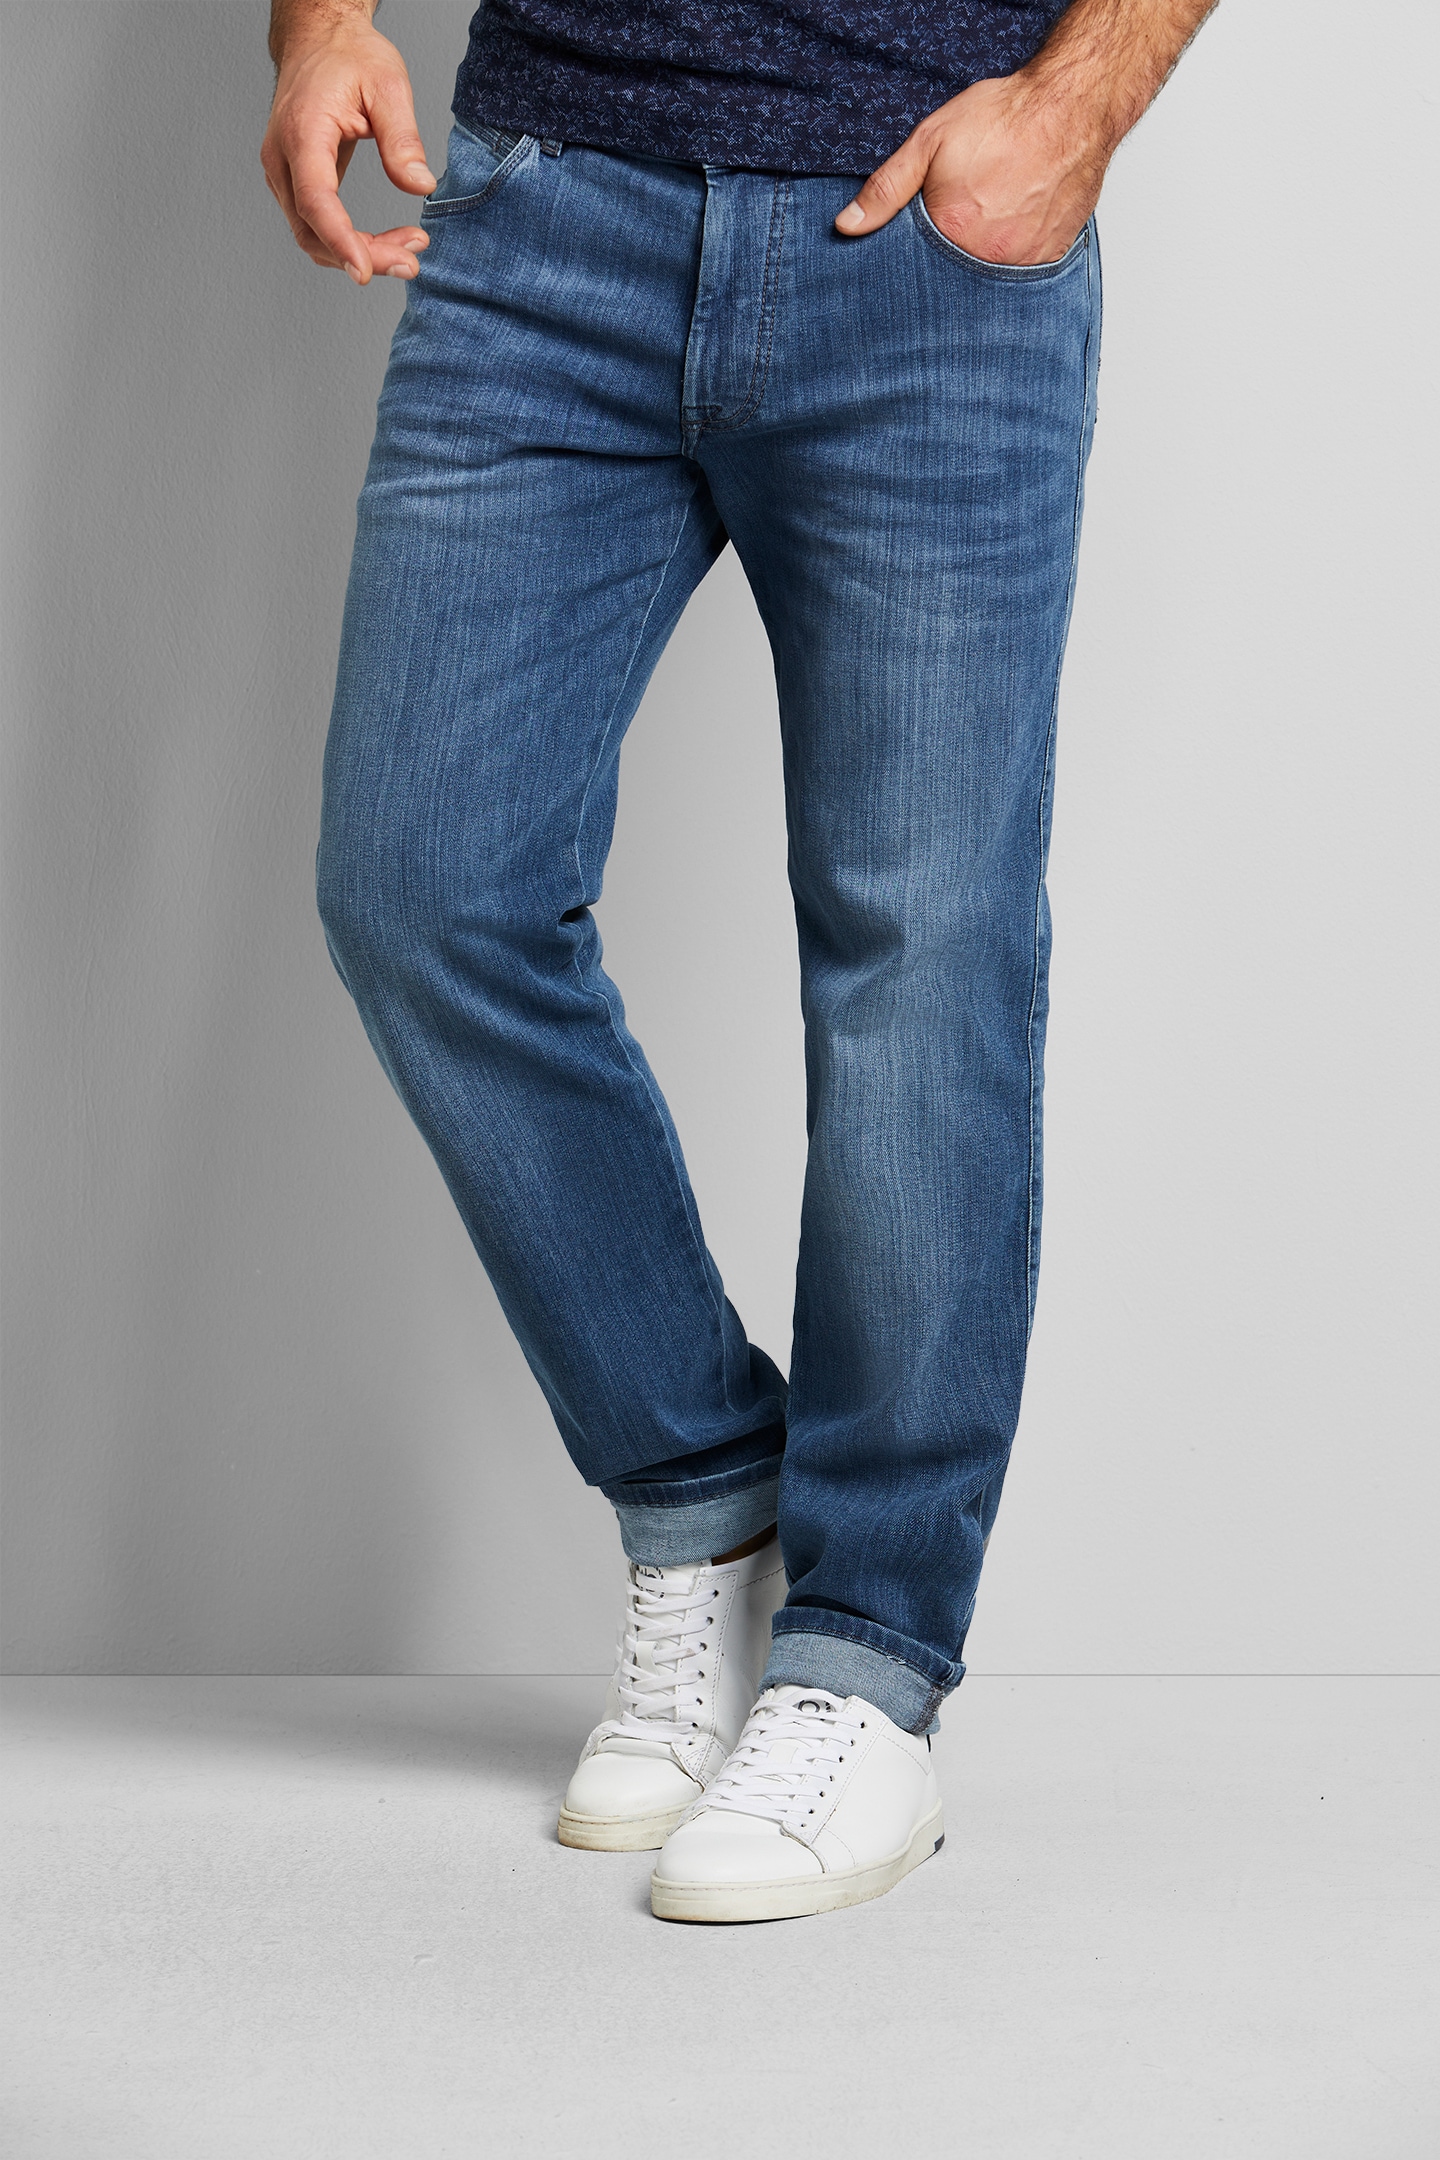 bugatti 5-Pocket-Jeans von bugatti